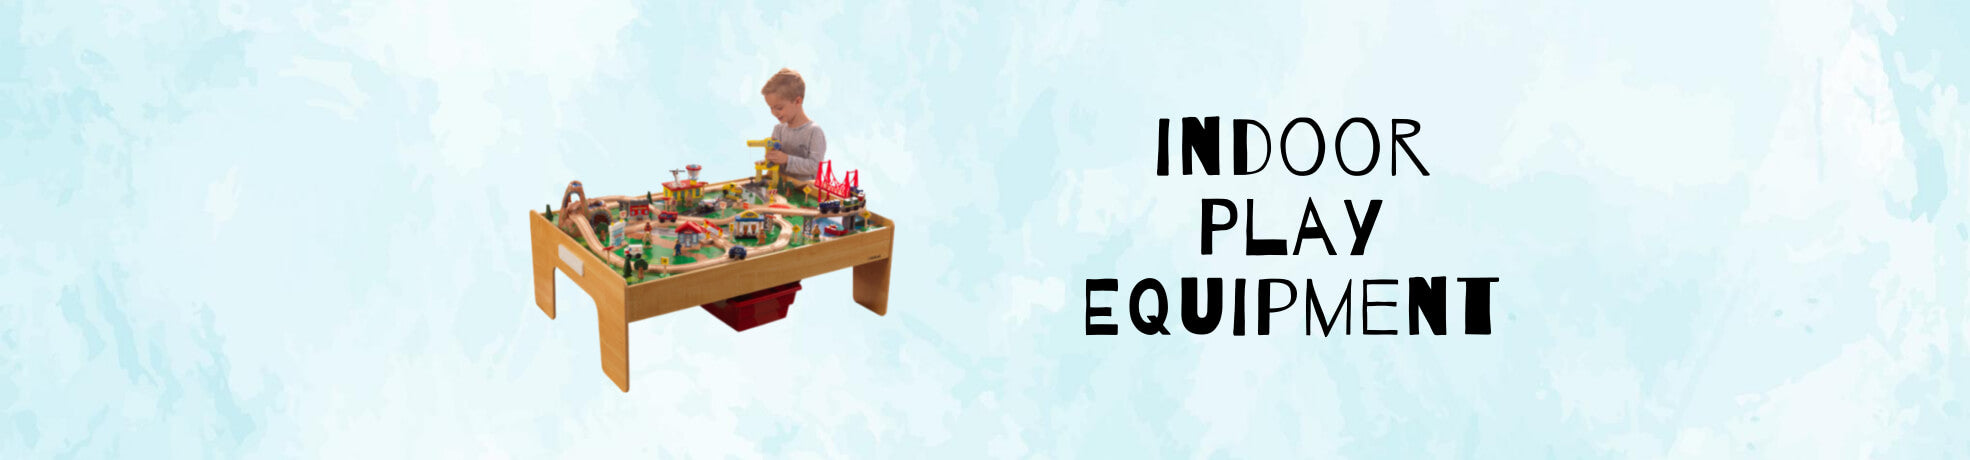 Toy Indoor Play Equipment for Kids Australia 